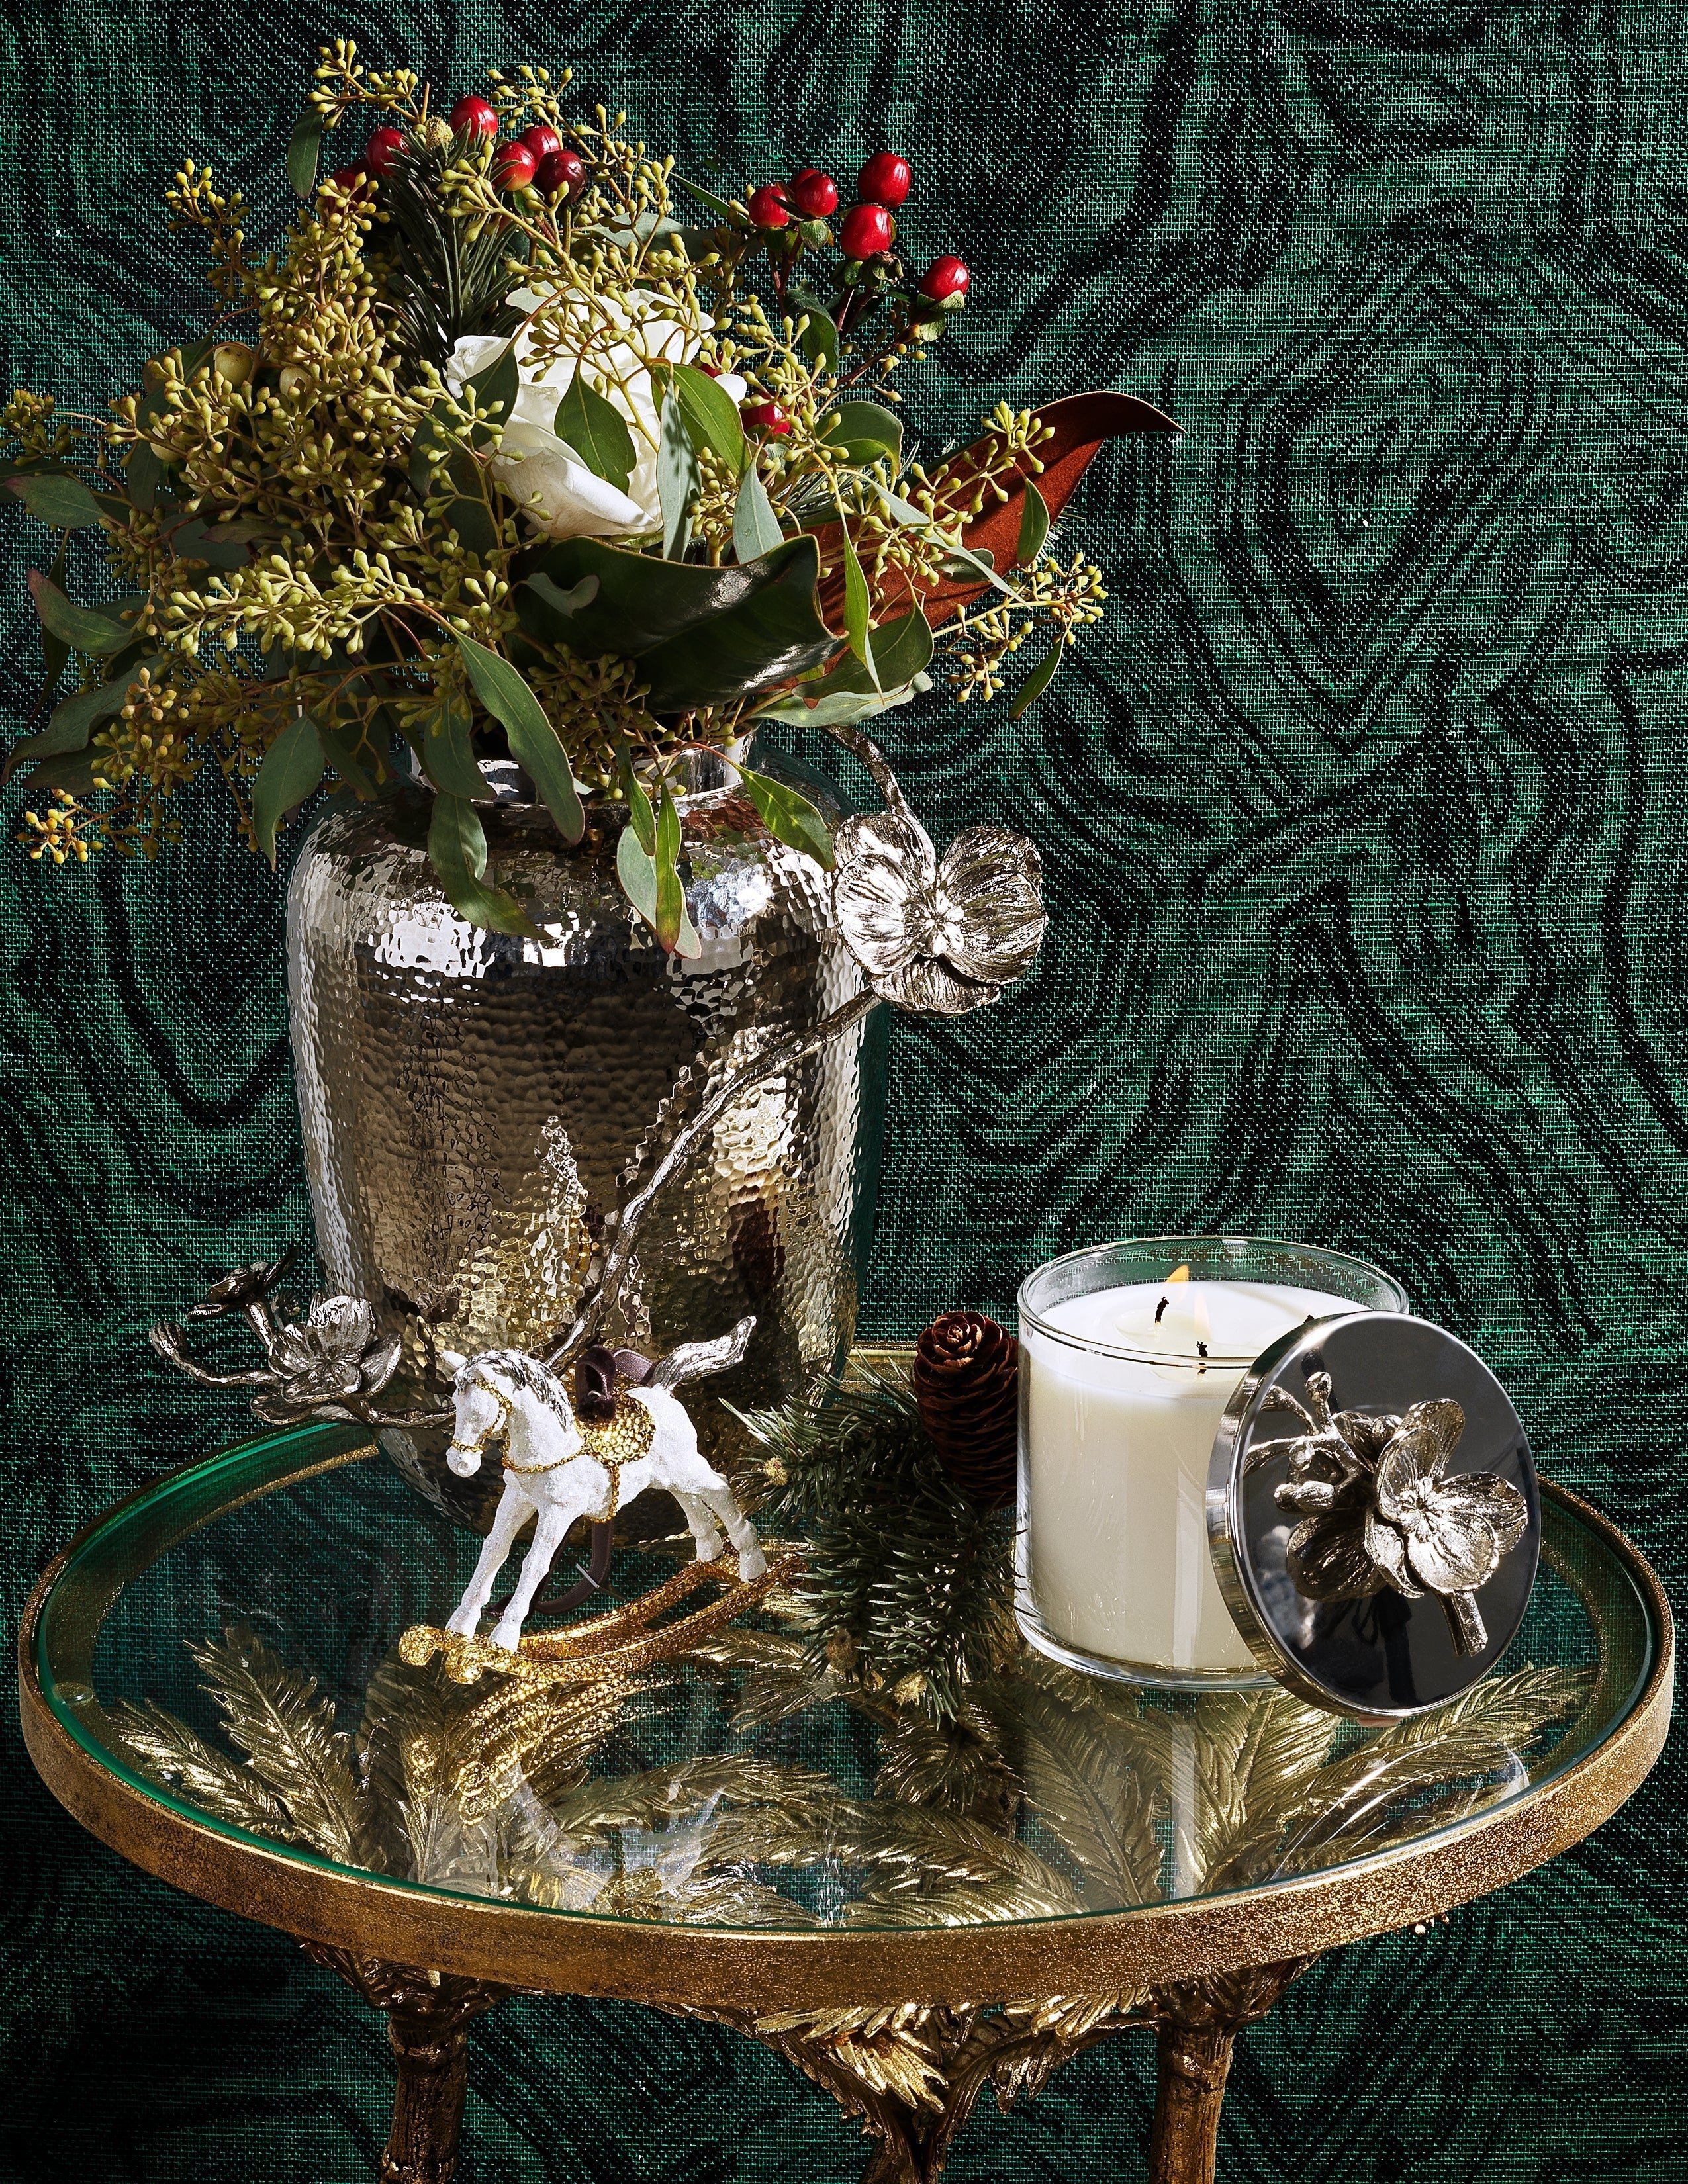 Michael Aram White Orchid Vase